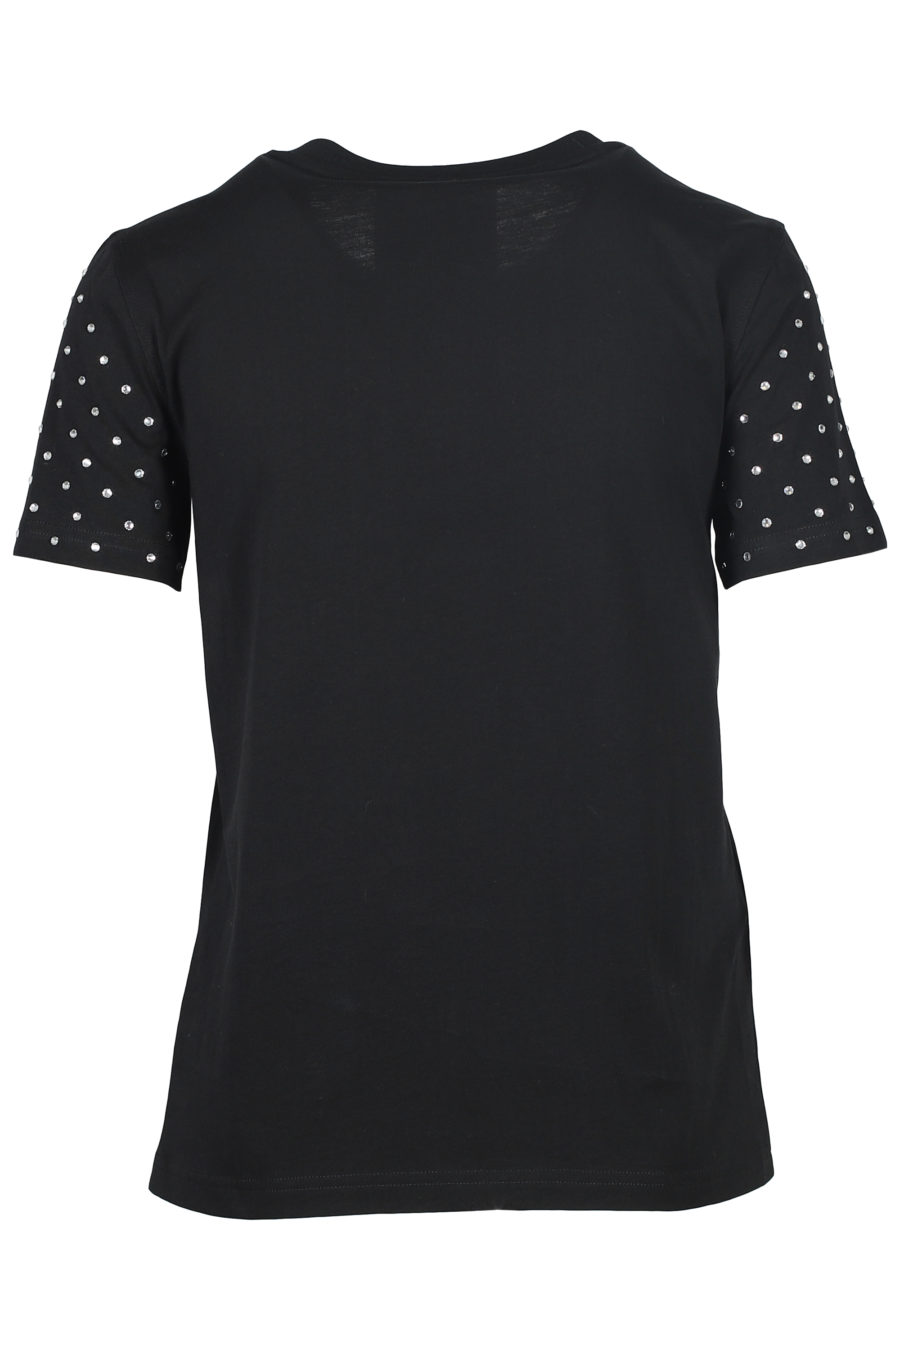 Camiseta negra con osito en strass - IMG 5515